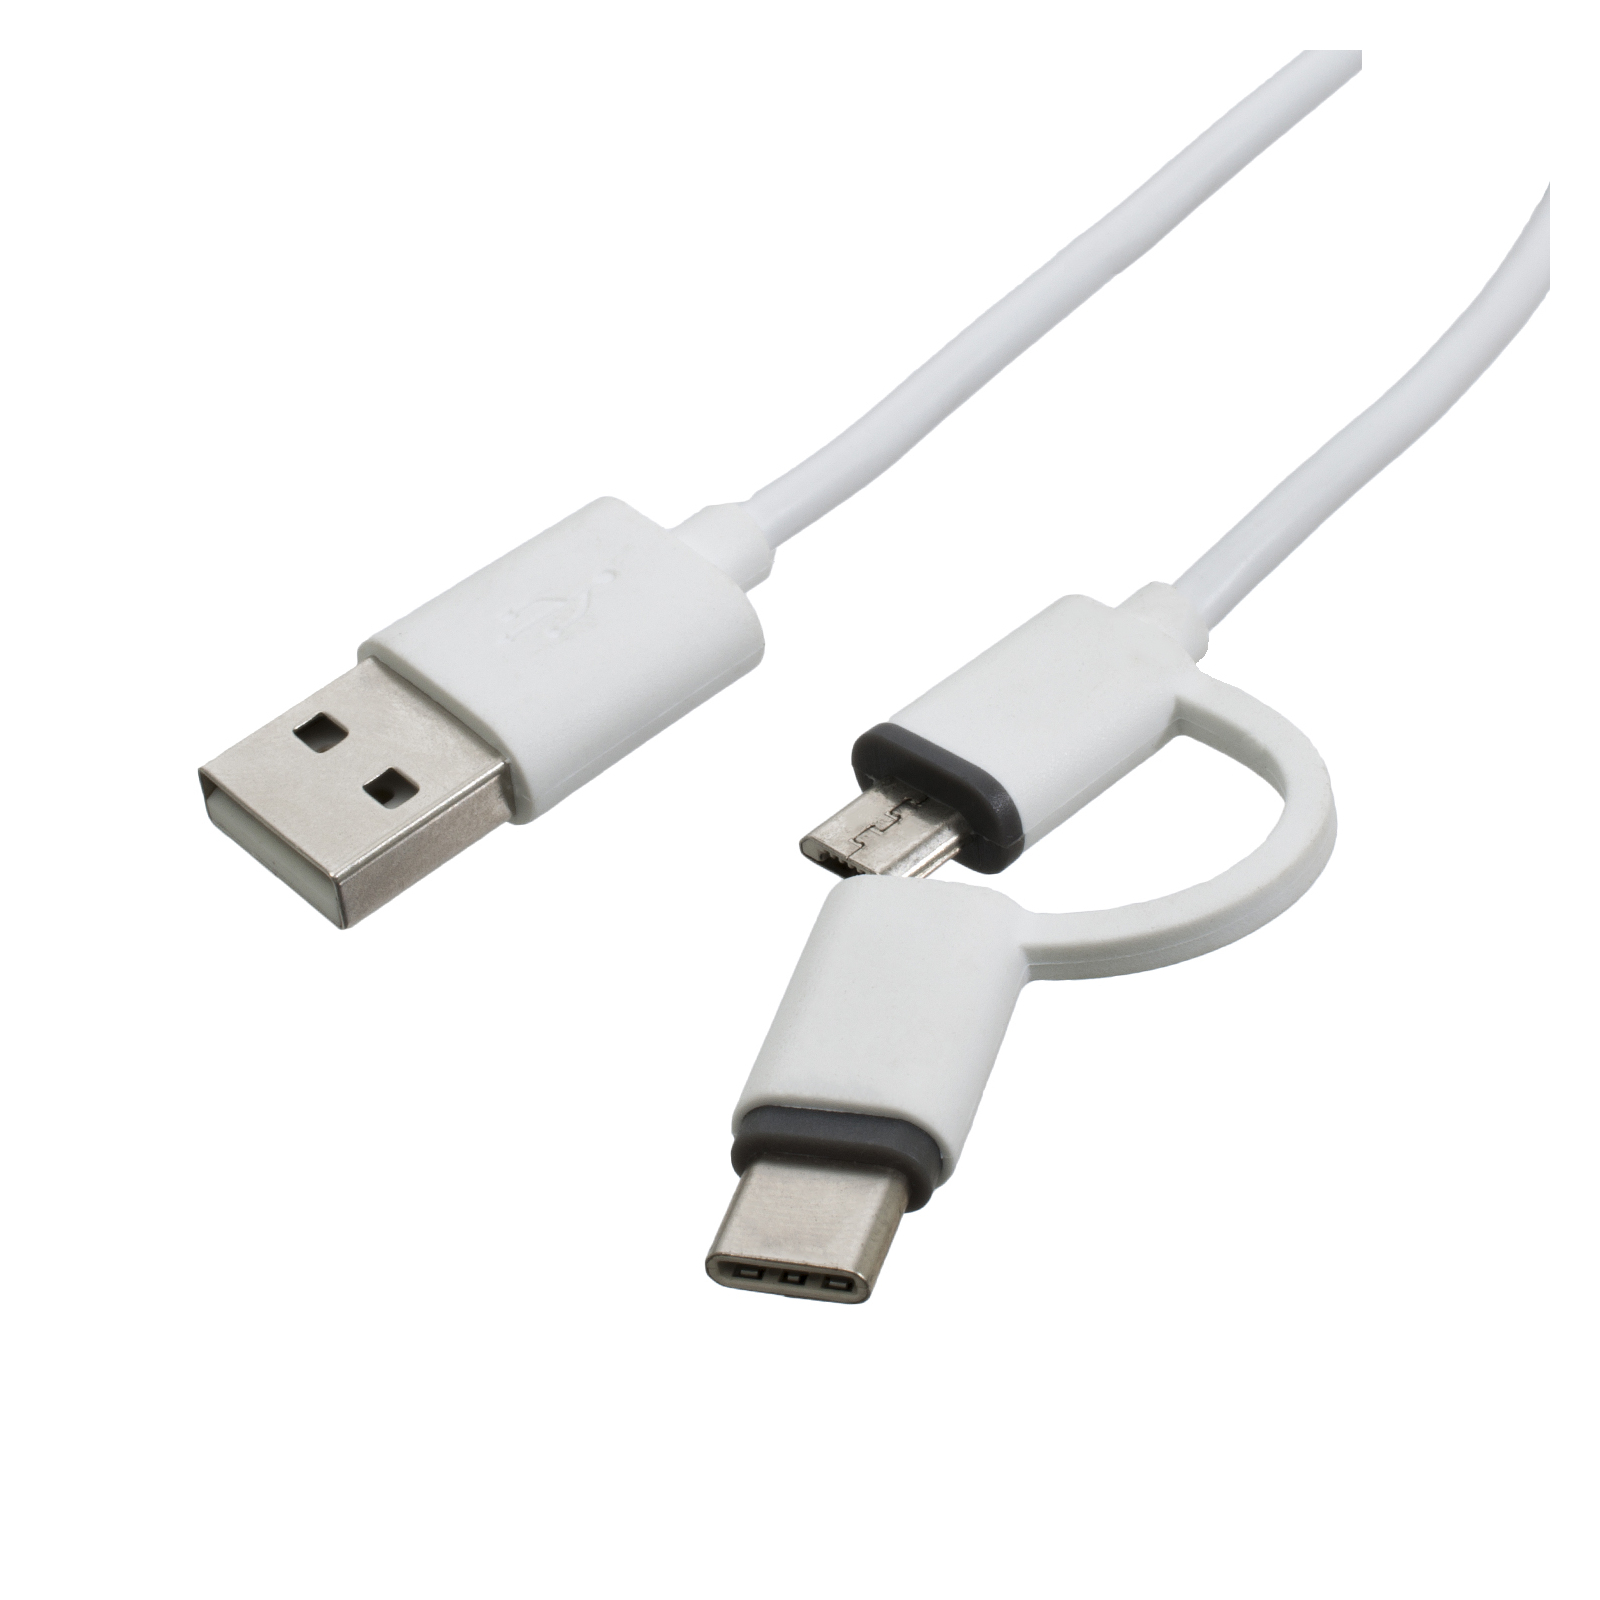 Дата кабель USB 2.0 AM to Micro 5P + Type-C 1.0m Patron (CAB-PN-MIC-TYPE-C-1M)